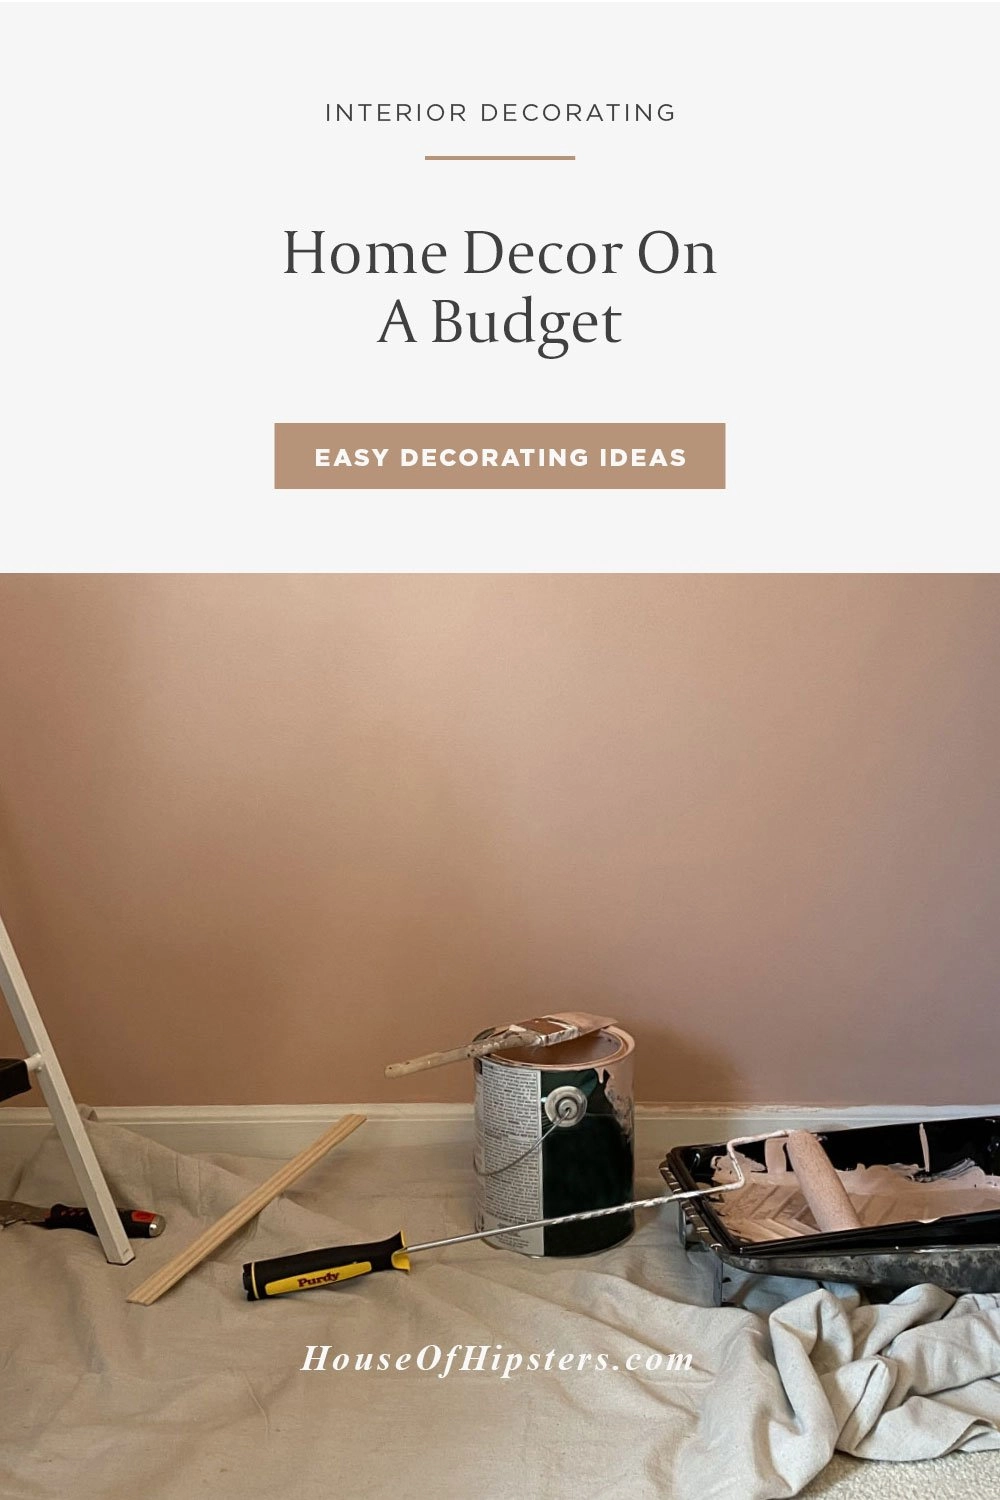 Home Decor on a Budget